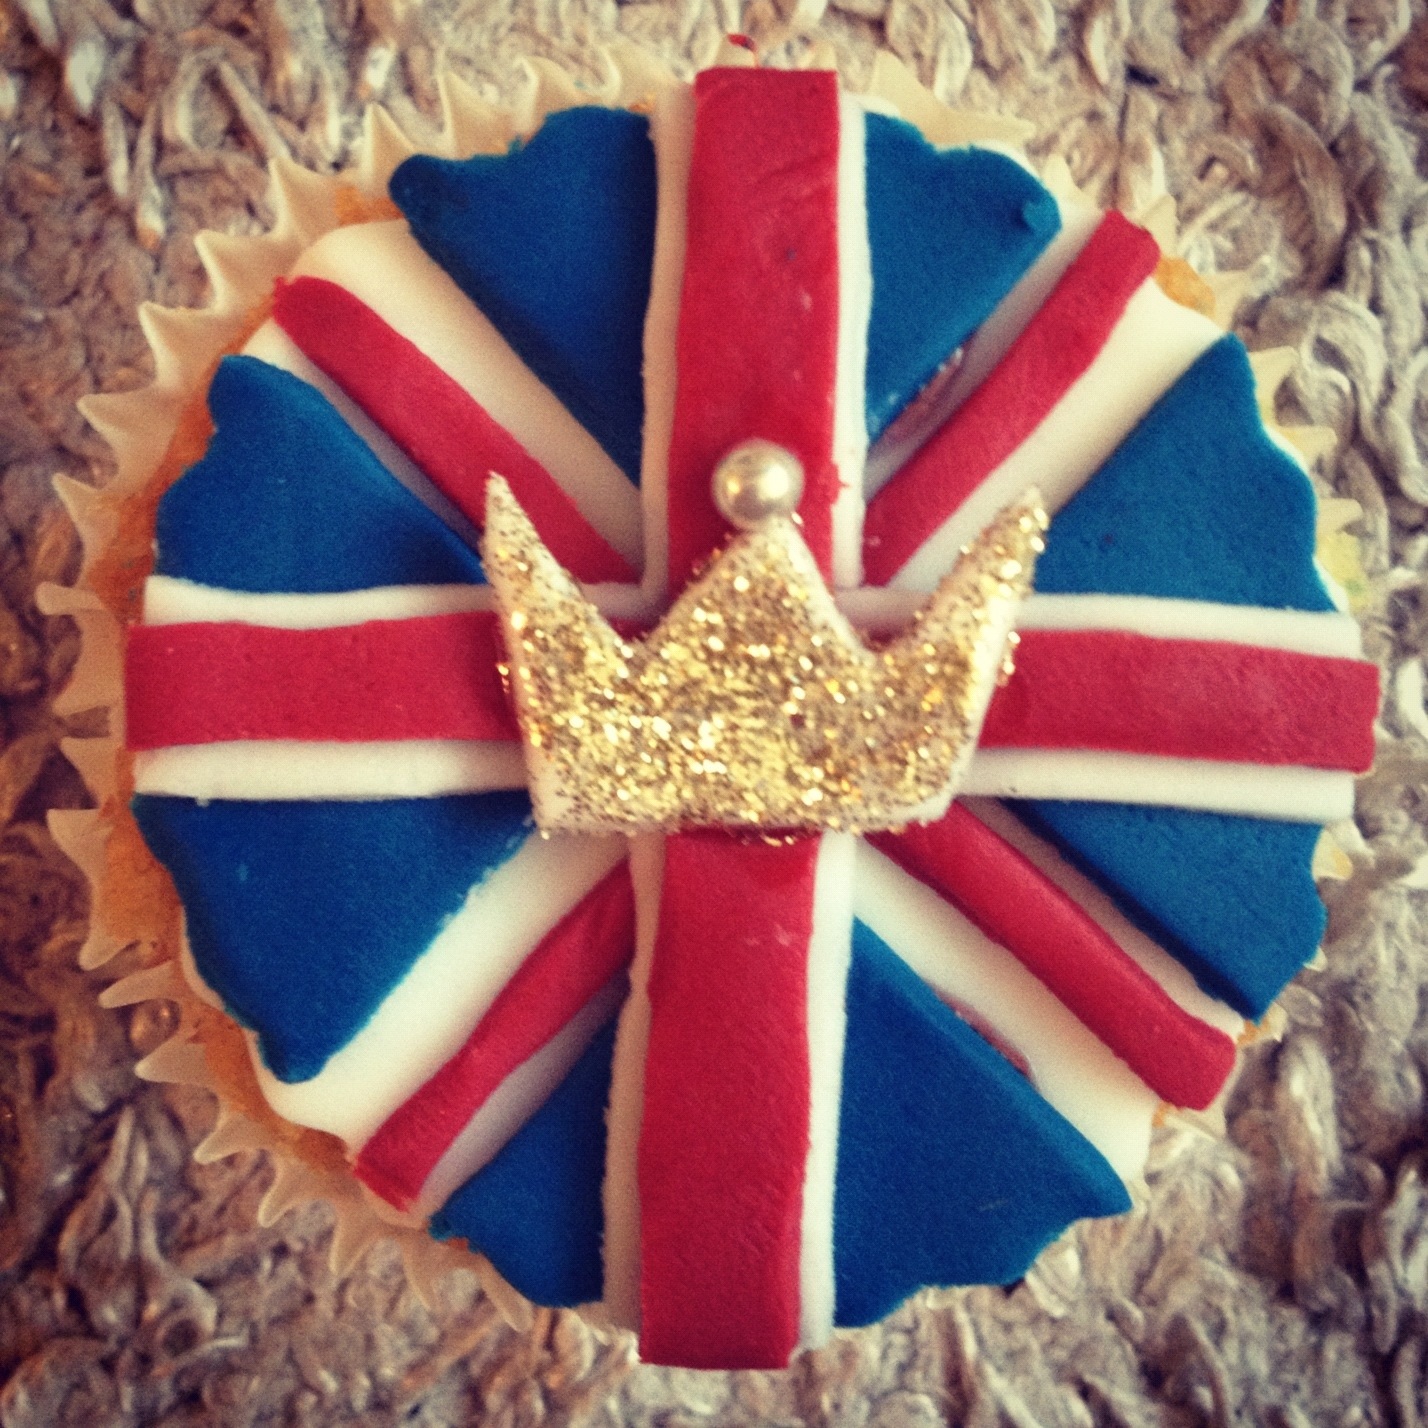 Jubilee Baking (and Iron Cupcake Royal Icing!!)